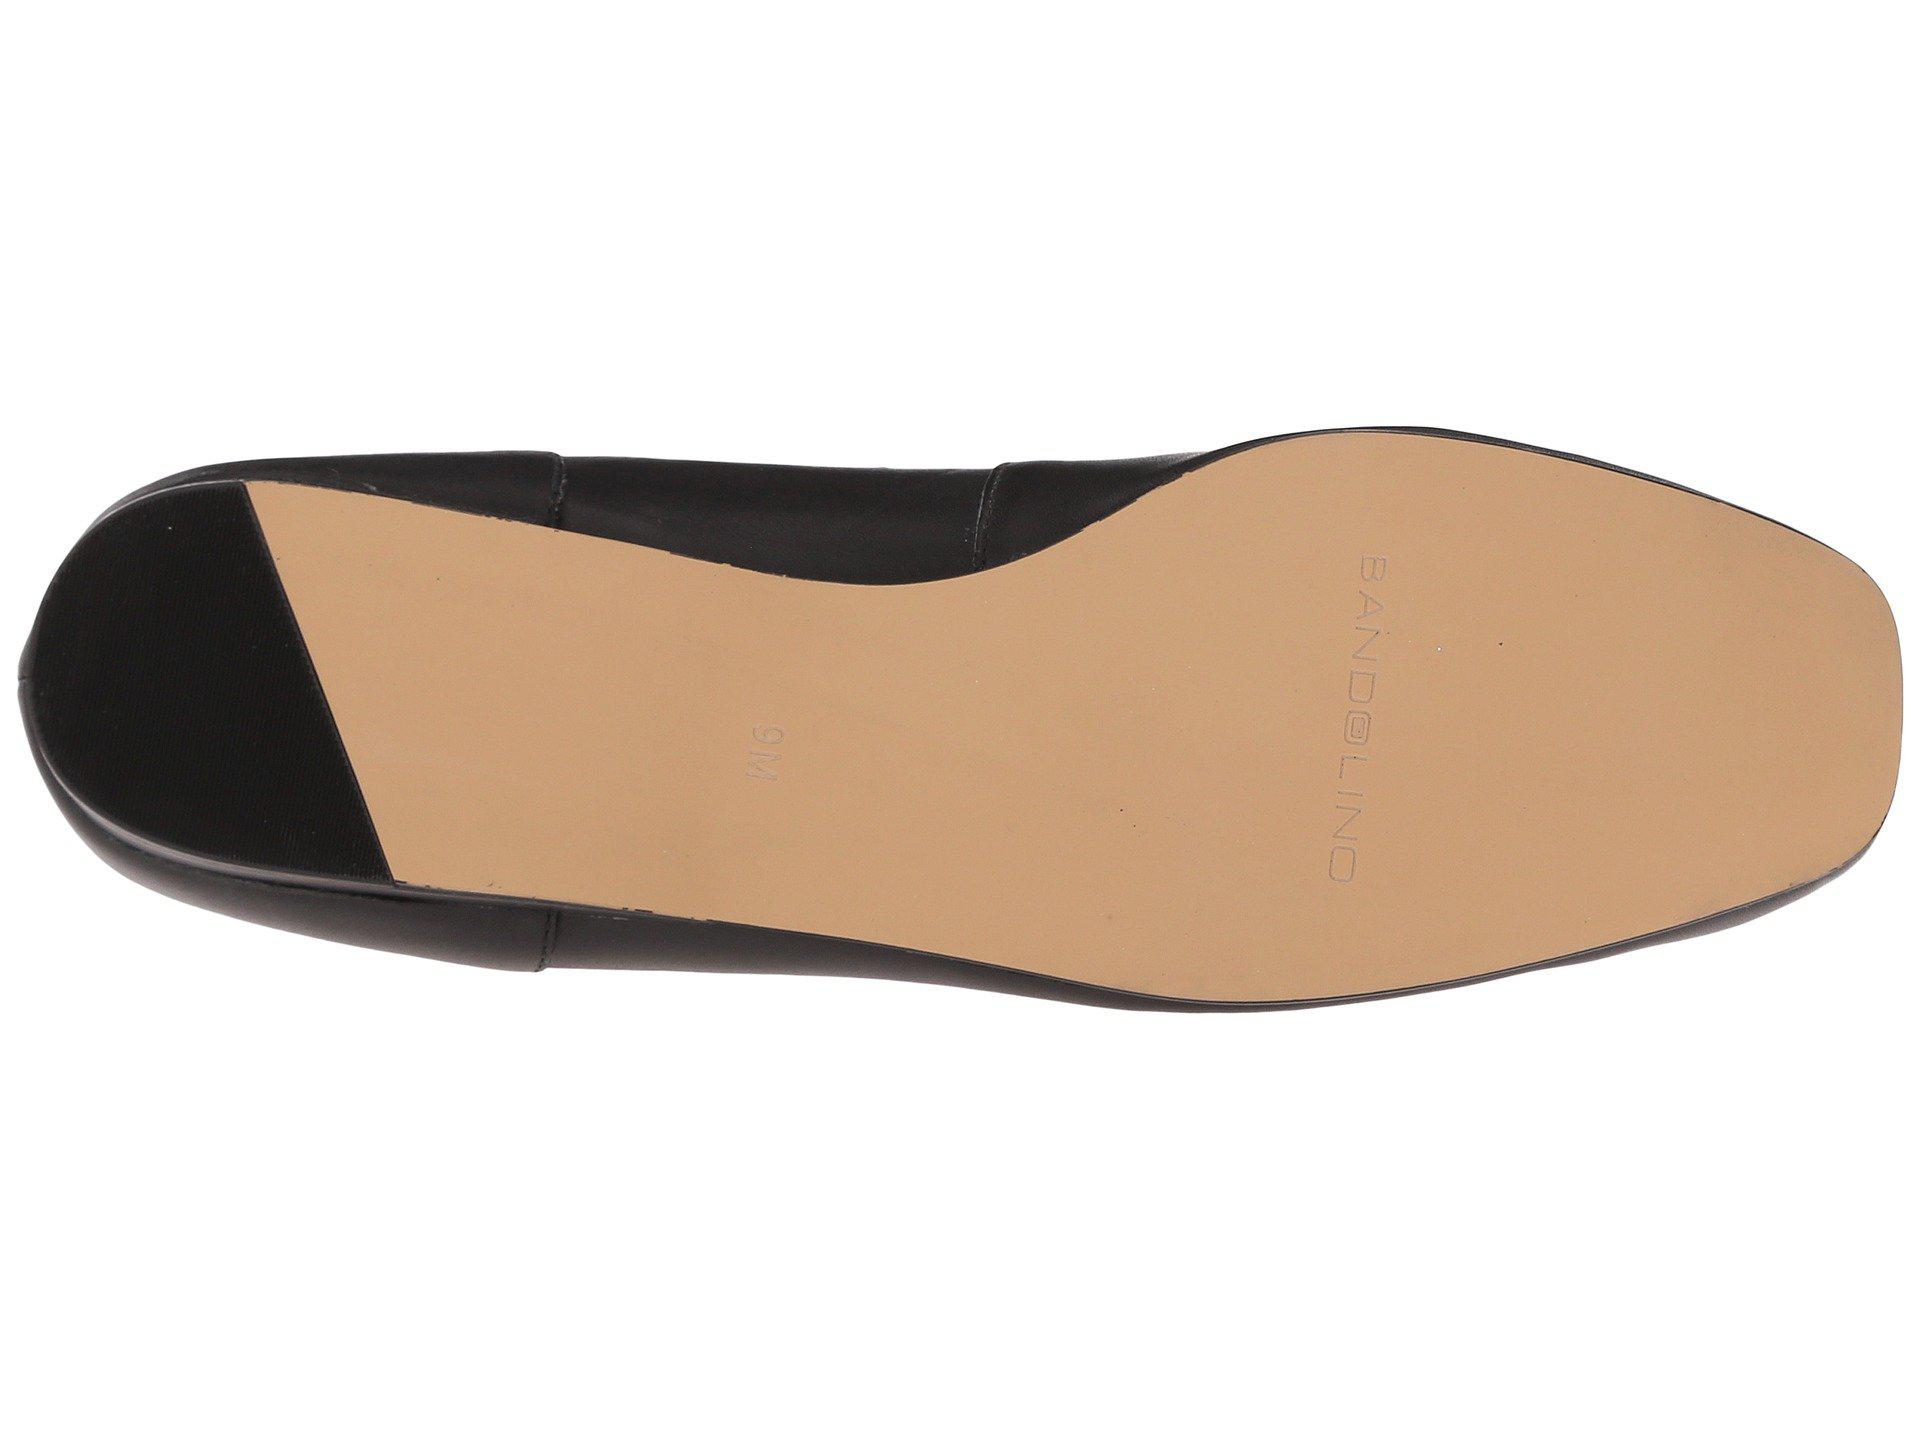 Bandolino Liberty (black Leather) Women's Slip On Shoes in Black - Lyst